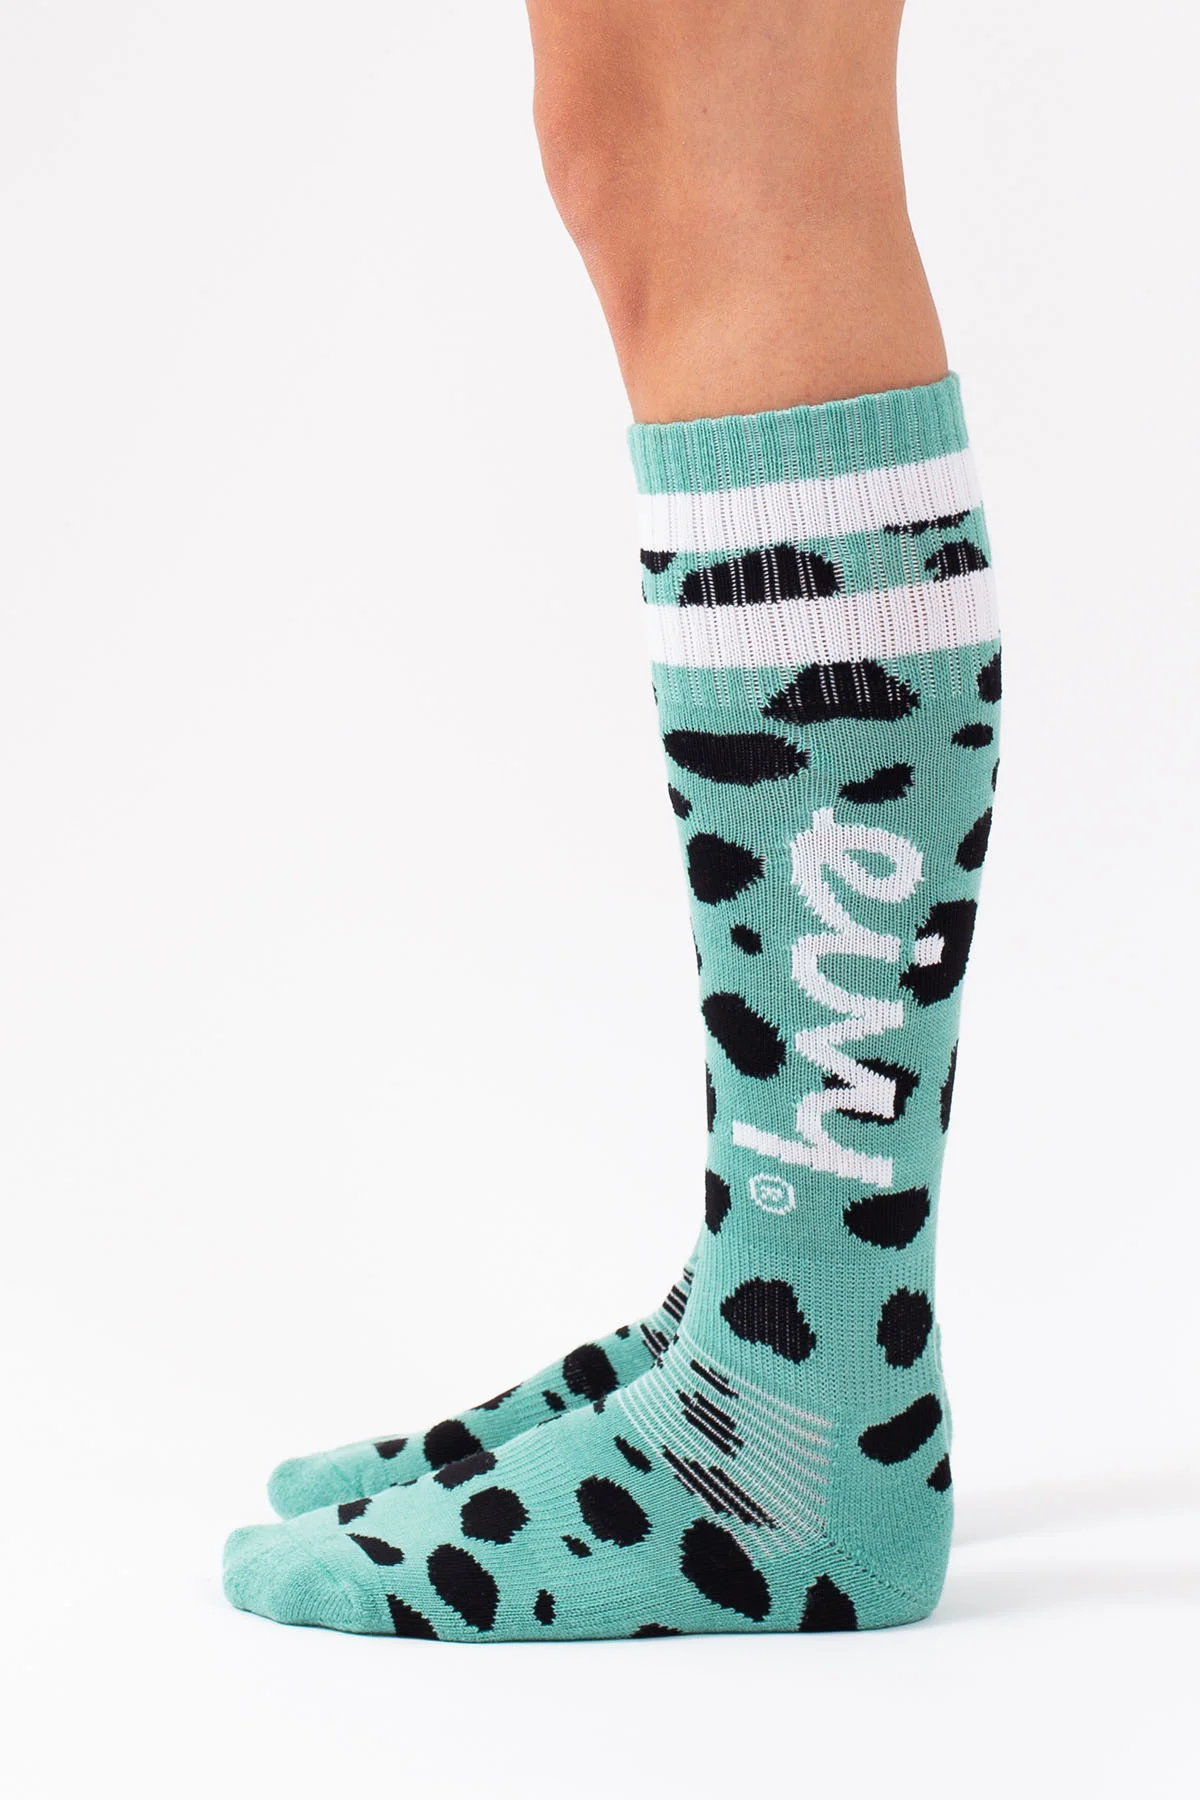 Cheerleader Wool Socks - Turquoise Cheetah | 39-41